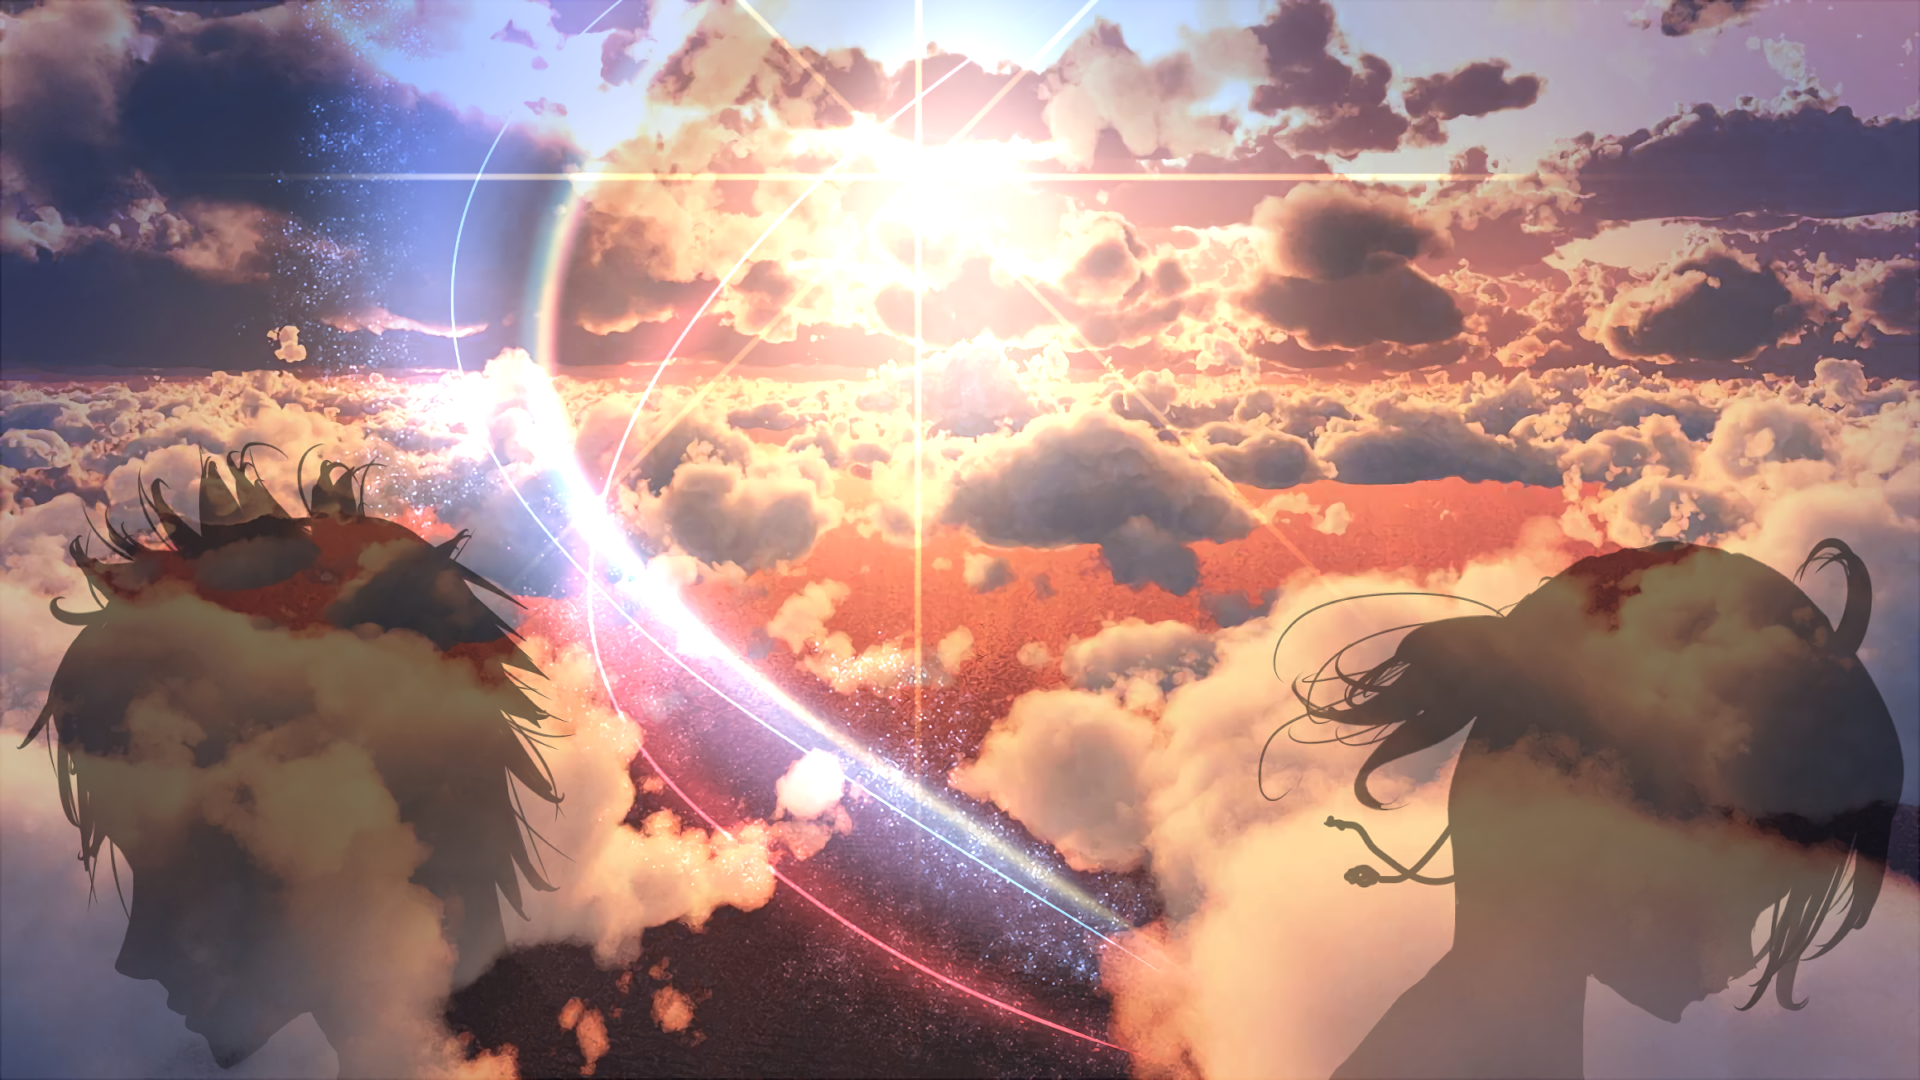 kimi no na wa wallpaper,sky,cloud,anime,cg artwork,atmosphere